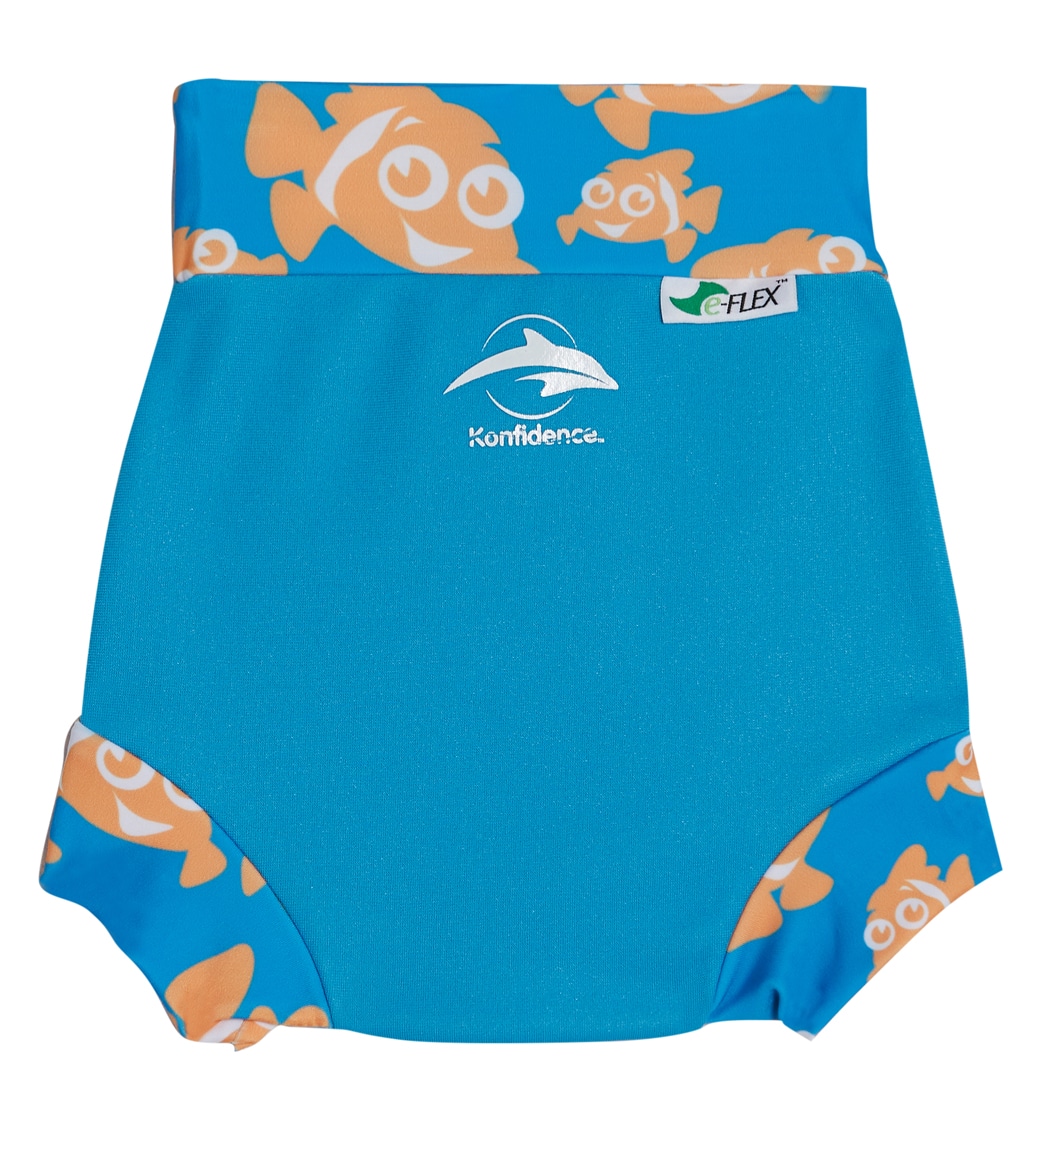 Konfidence Splashytm Nappy W E-Flex Baby - Blue Clownfish 12-18 Months - Swimoutlet.com